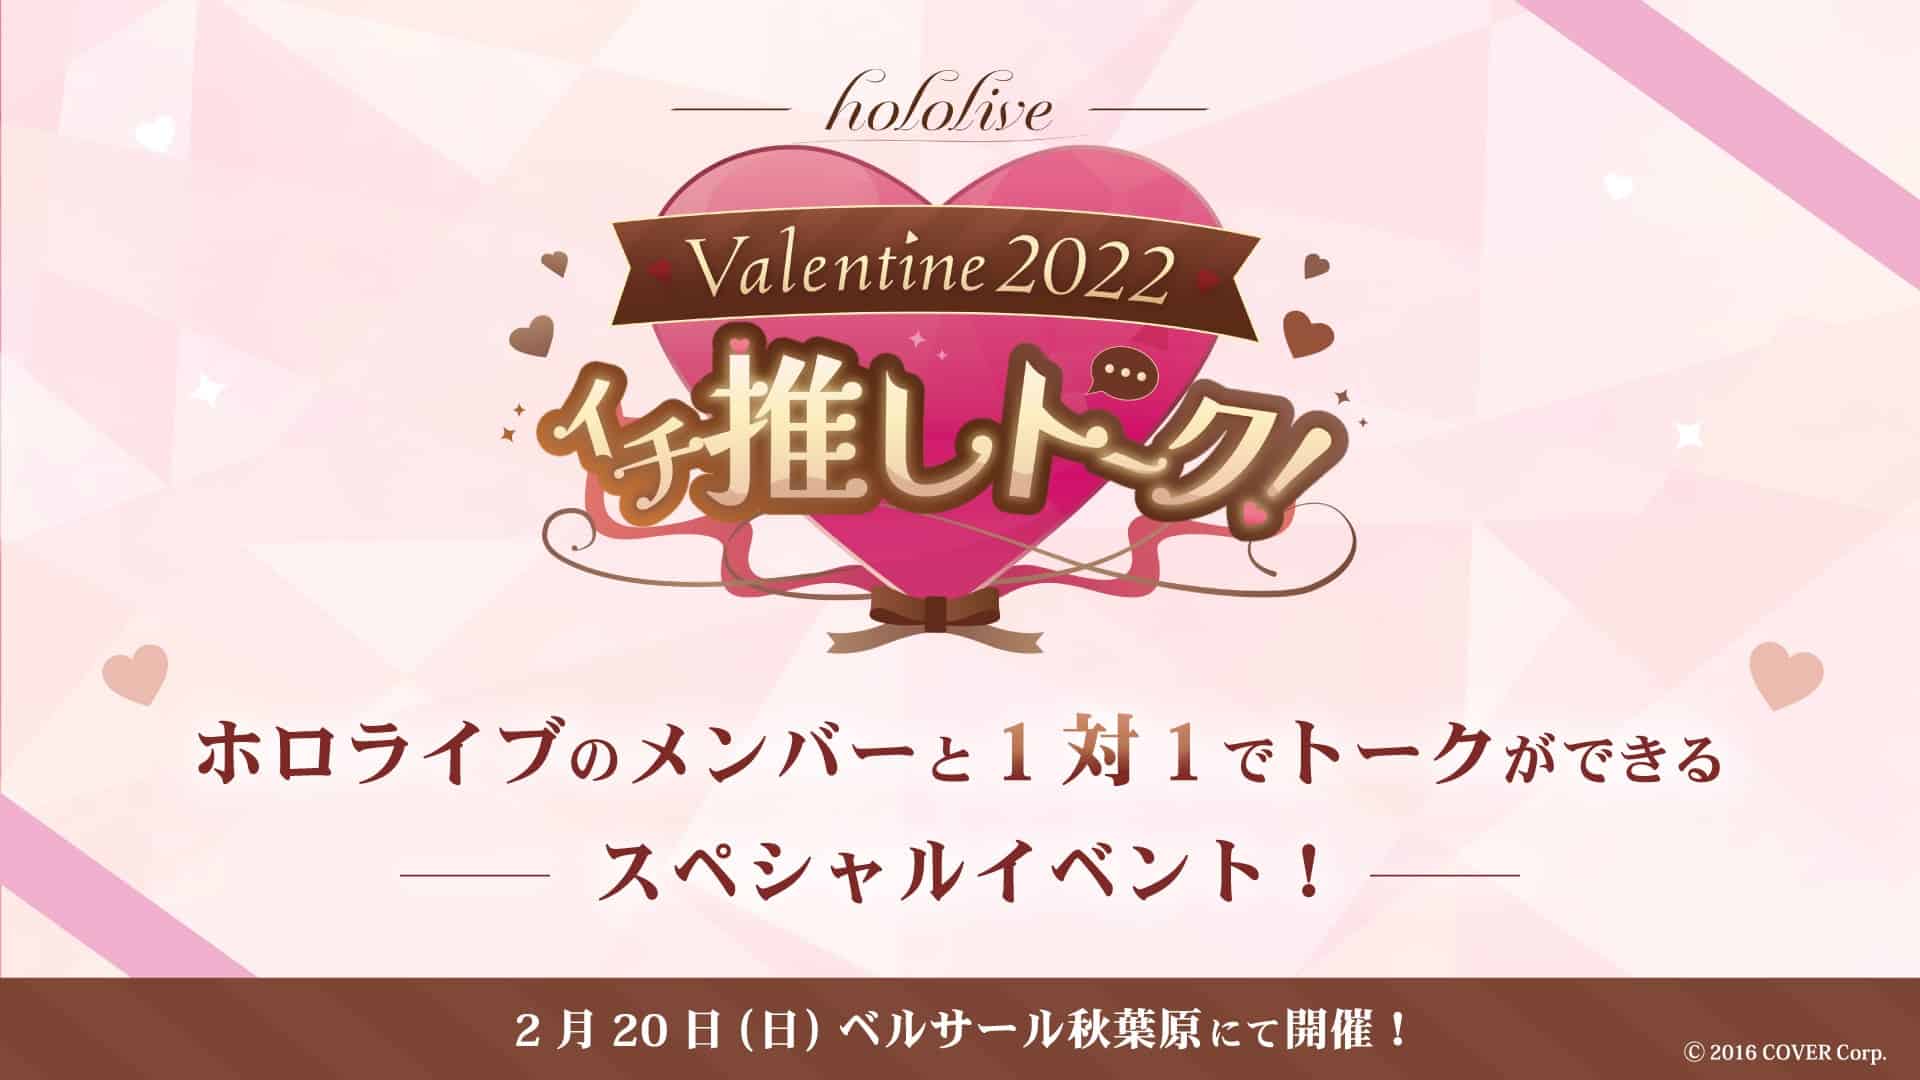 Hololive Valentine 2022 ichi oshi talk